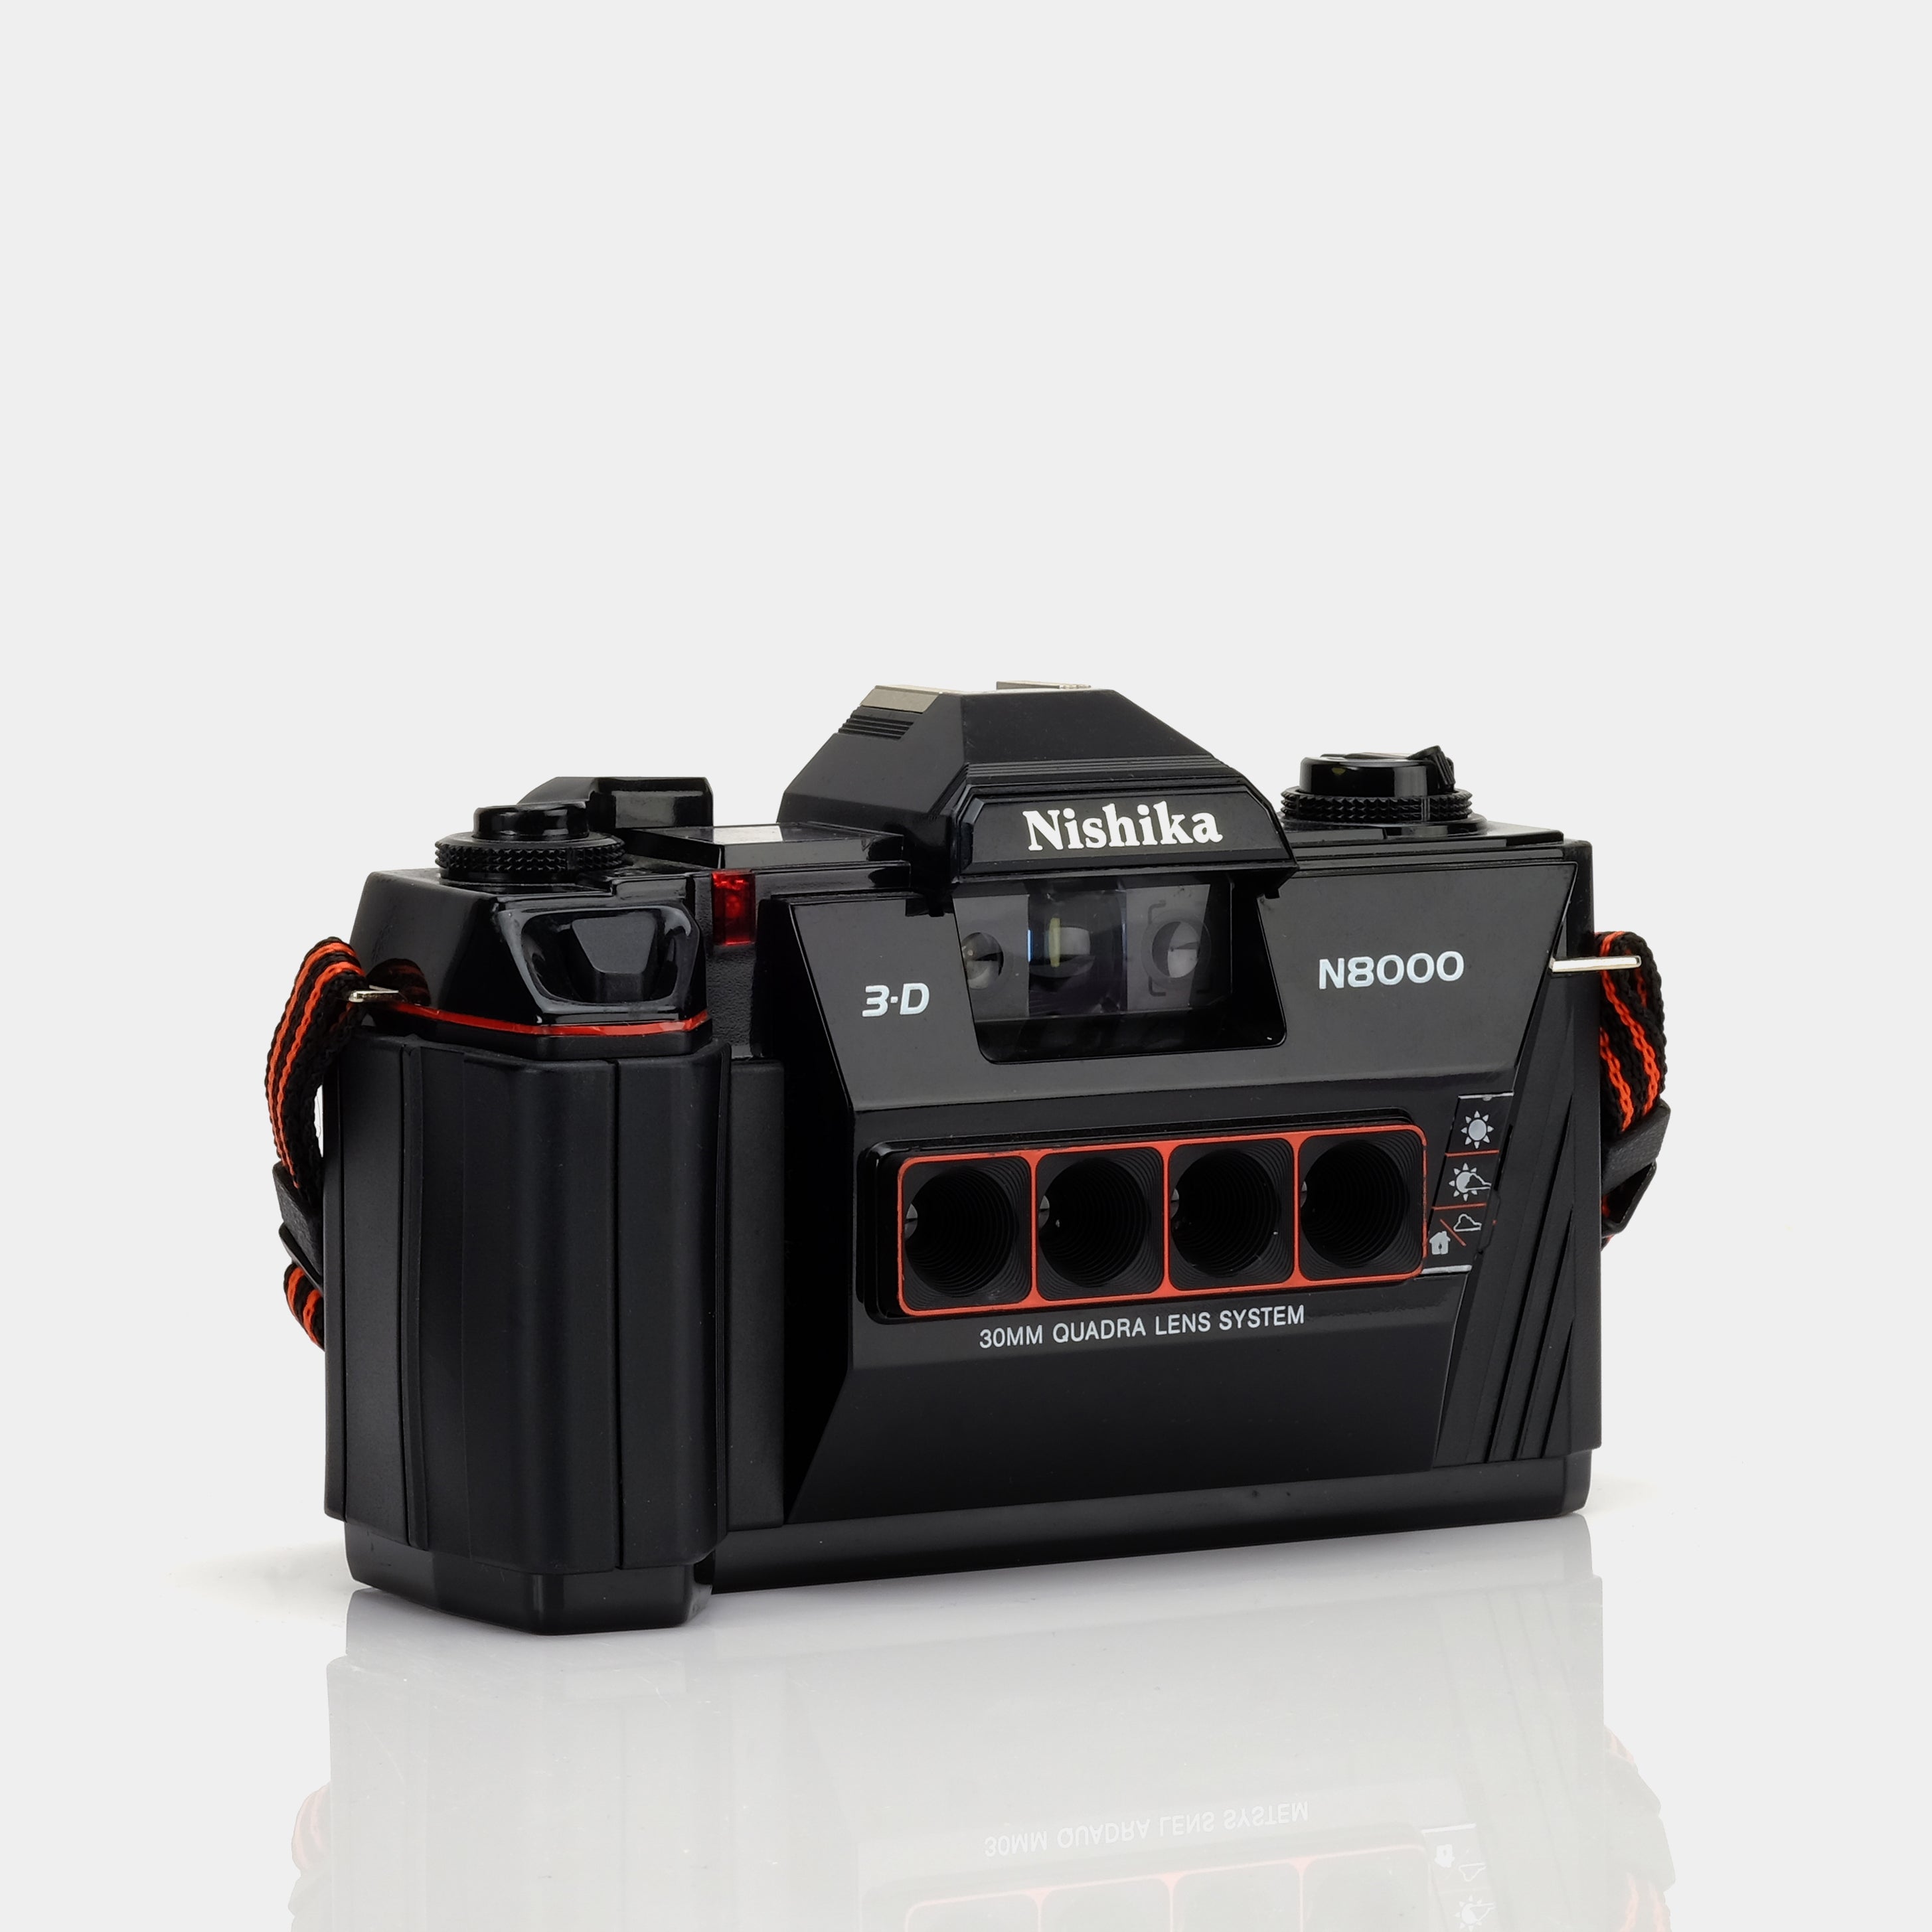 Nishika 3D N8000 Stereo 35mm Film Camera